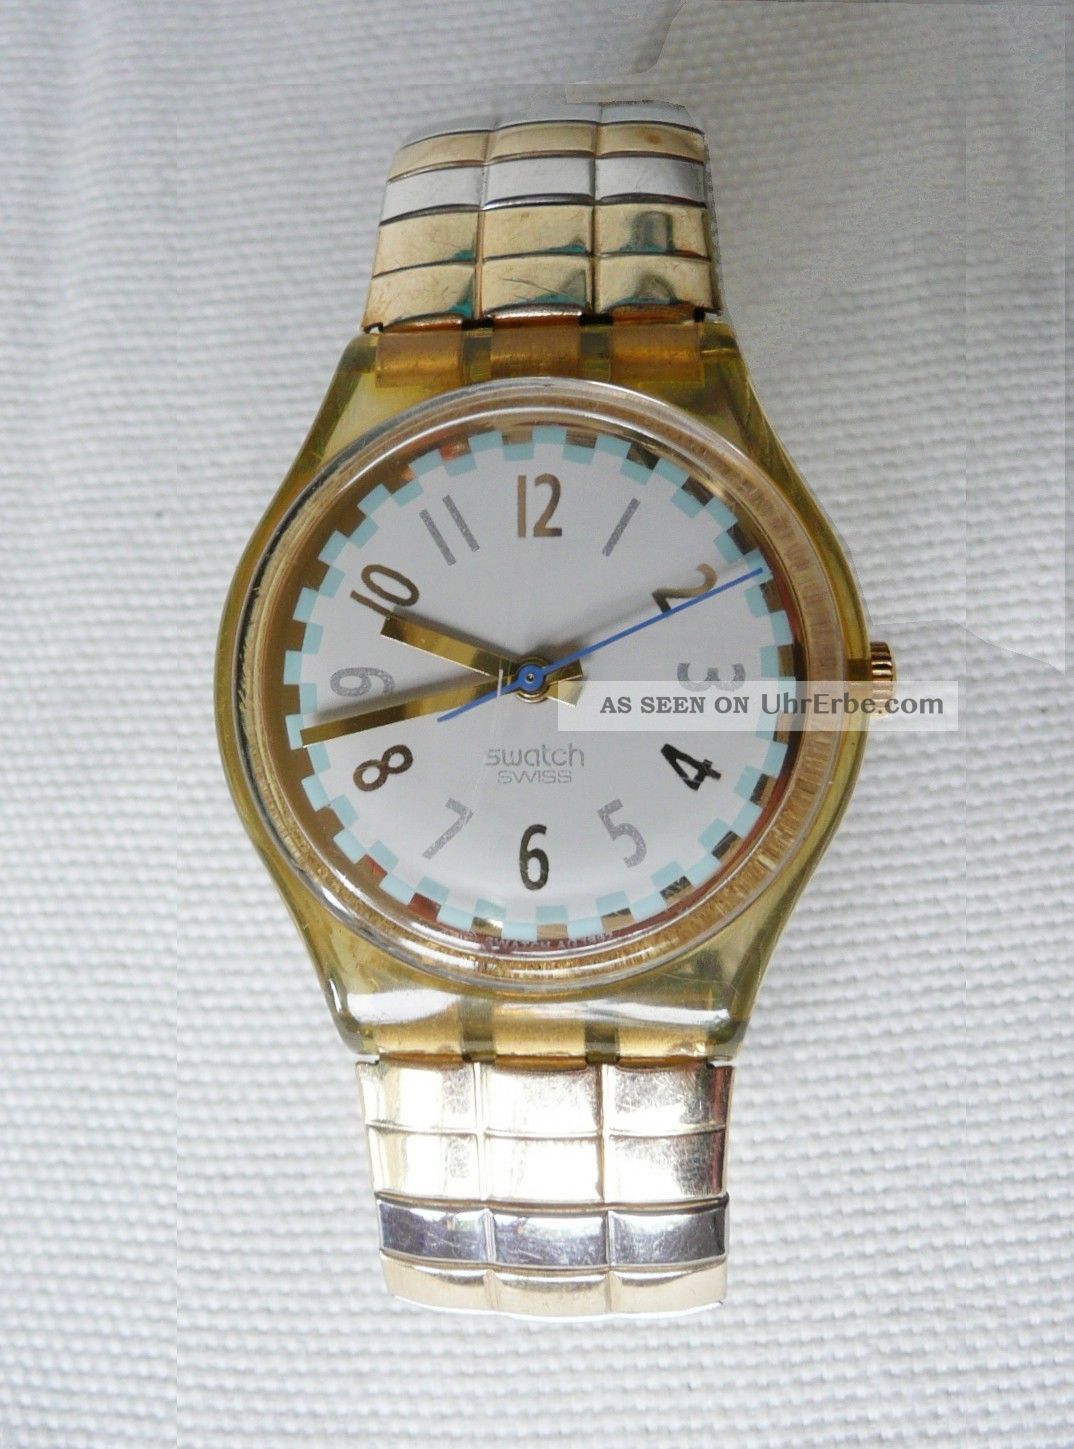 Gk150 Swatch Gent Cool Fred 1993 Voll Funktionsfähig Armbanduhren Bild